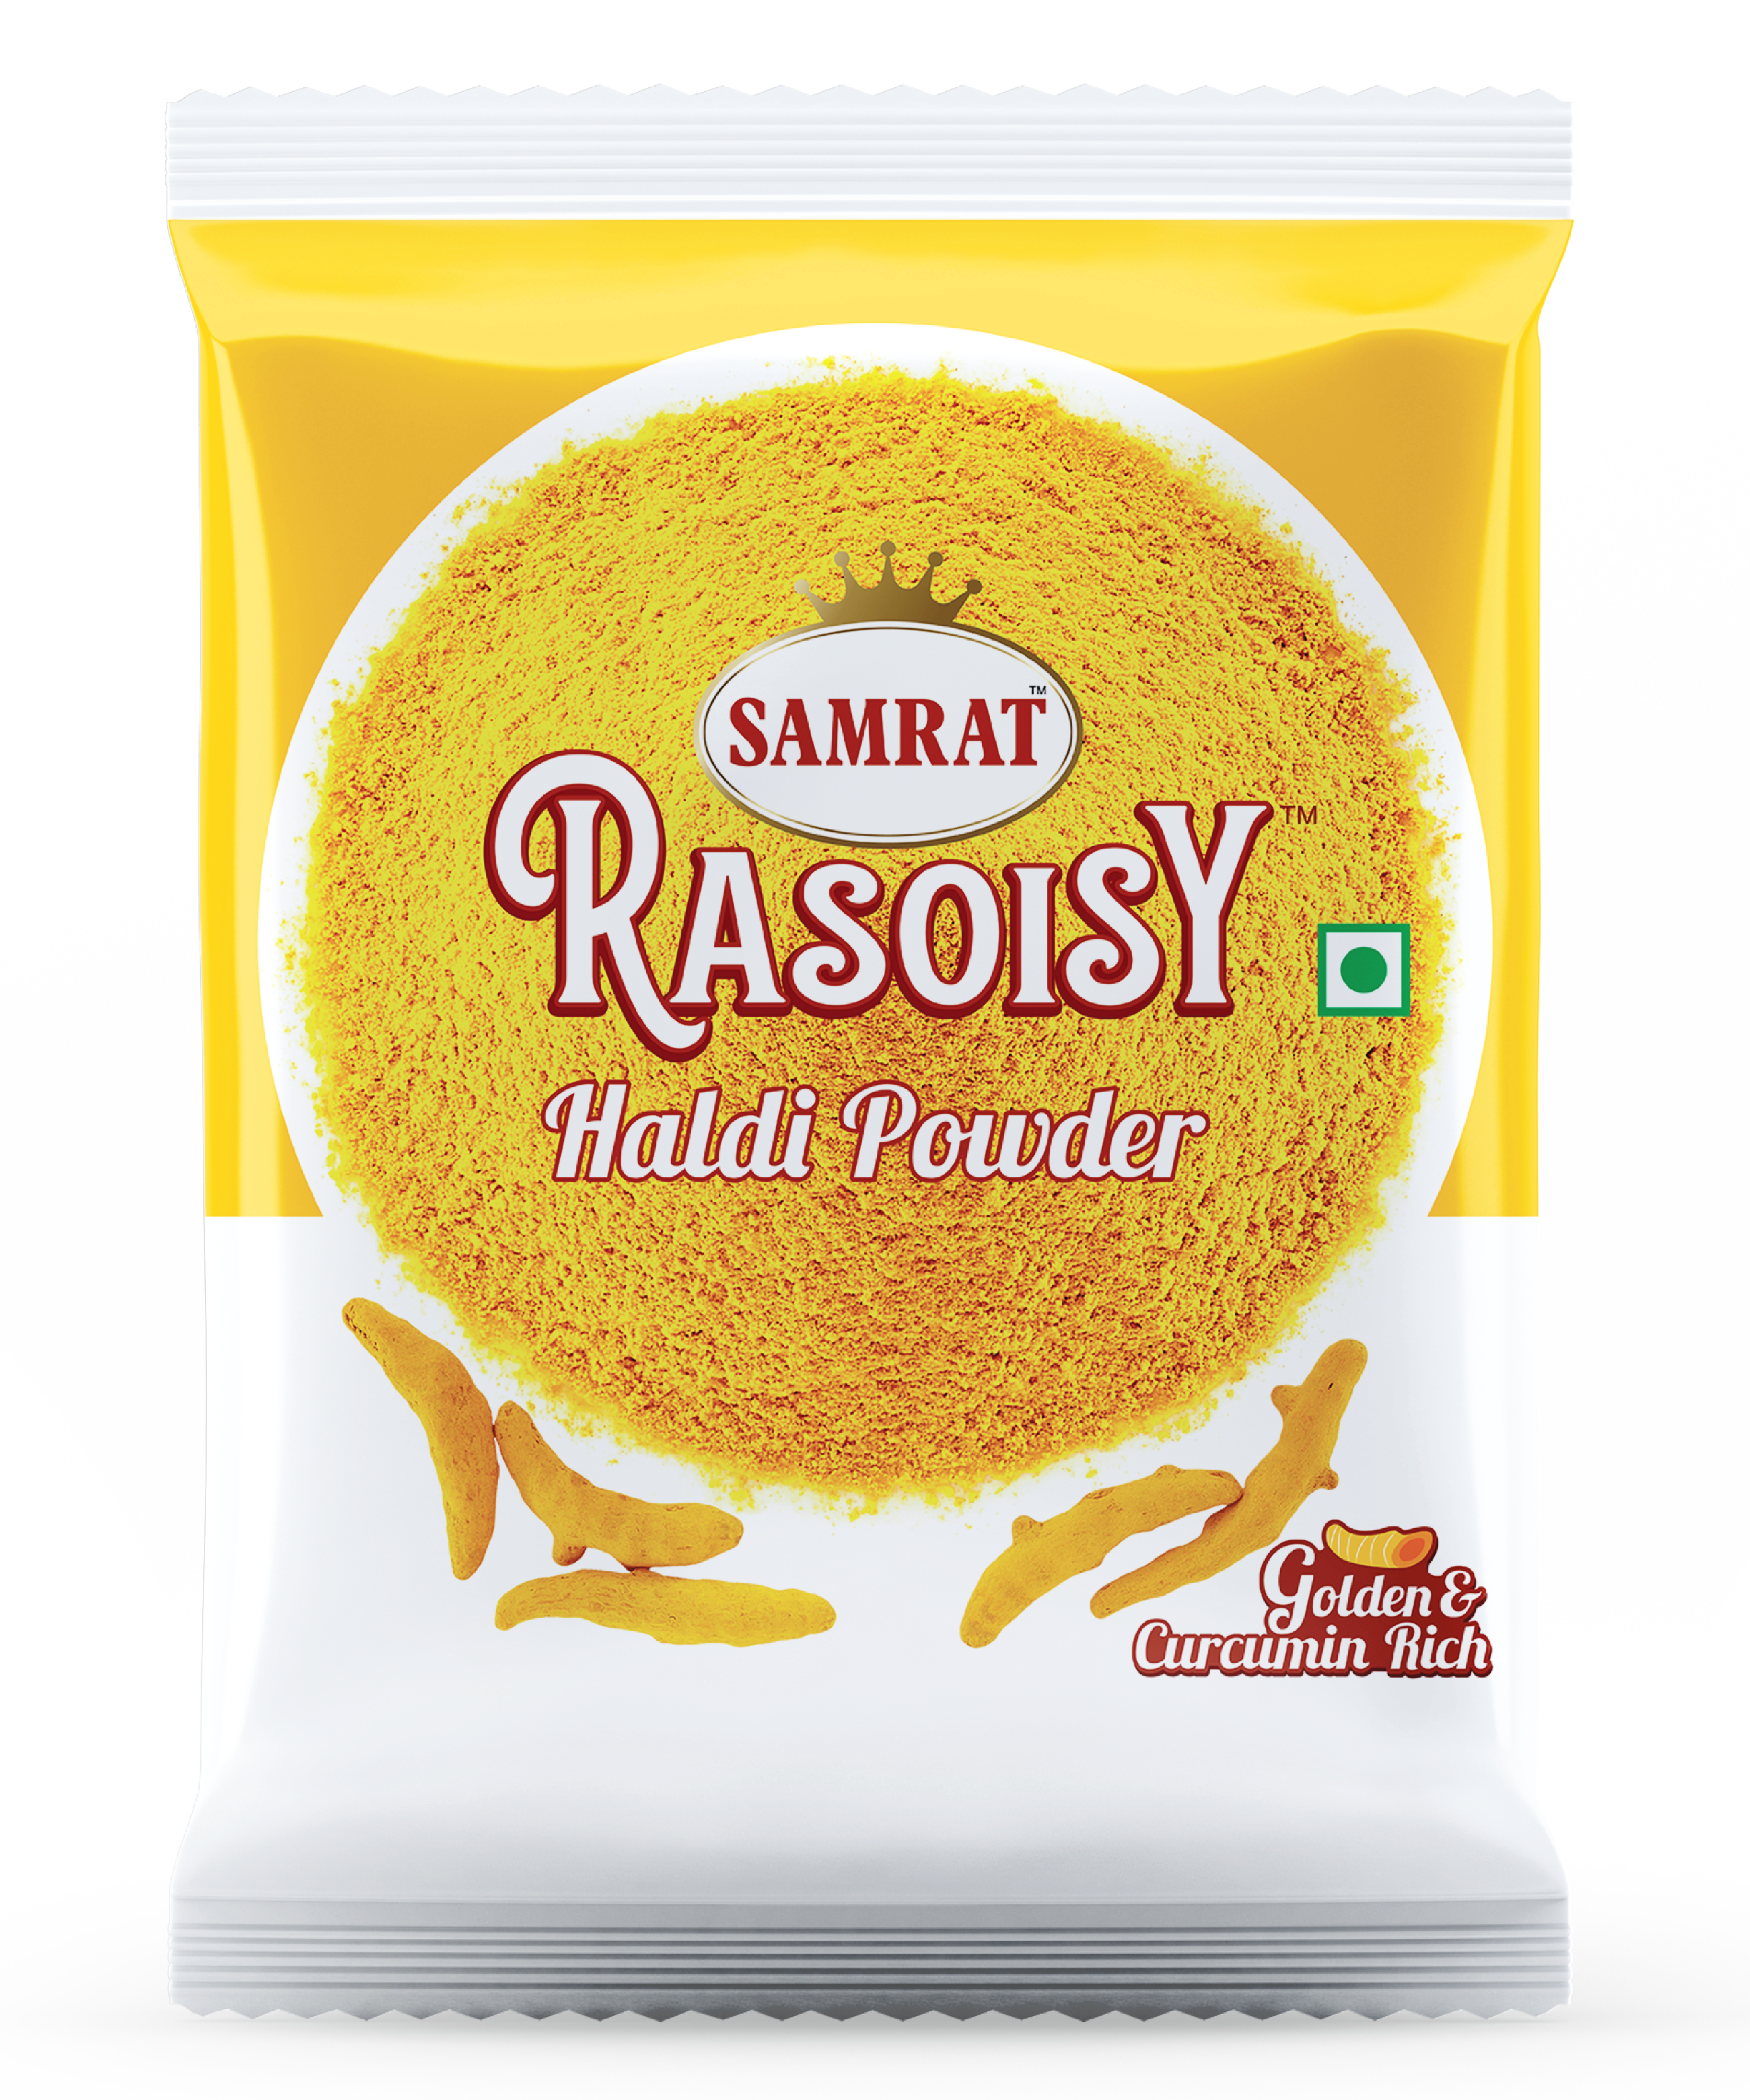 Rasoisy-haldi-powder